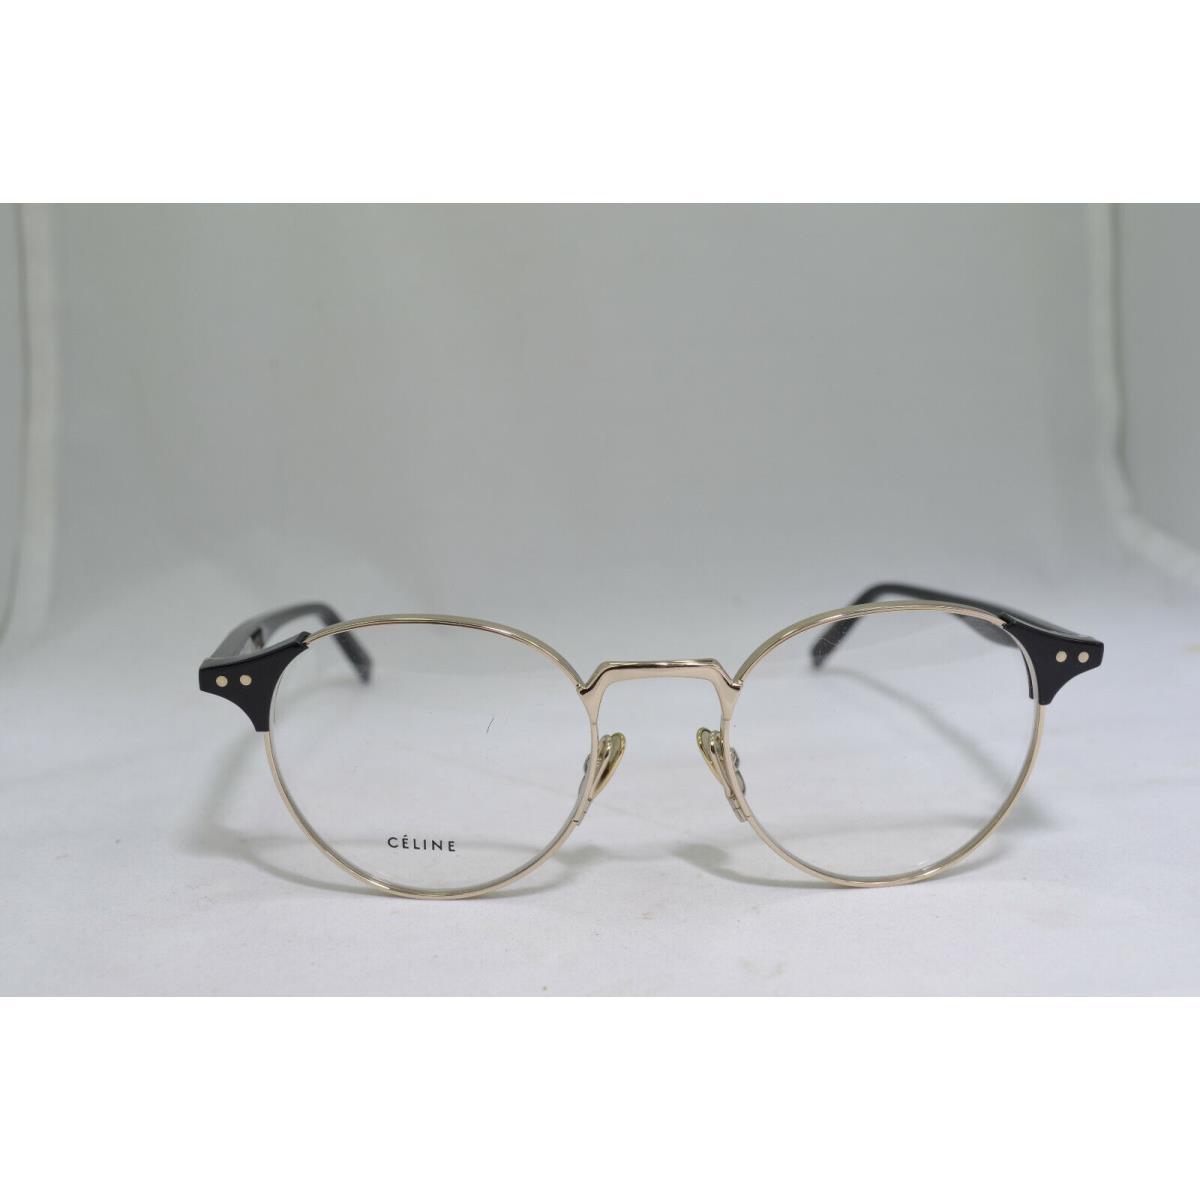 Celine eyeglasses  - Silver Frame 0